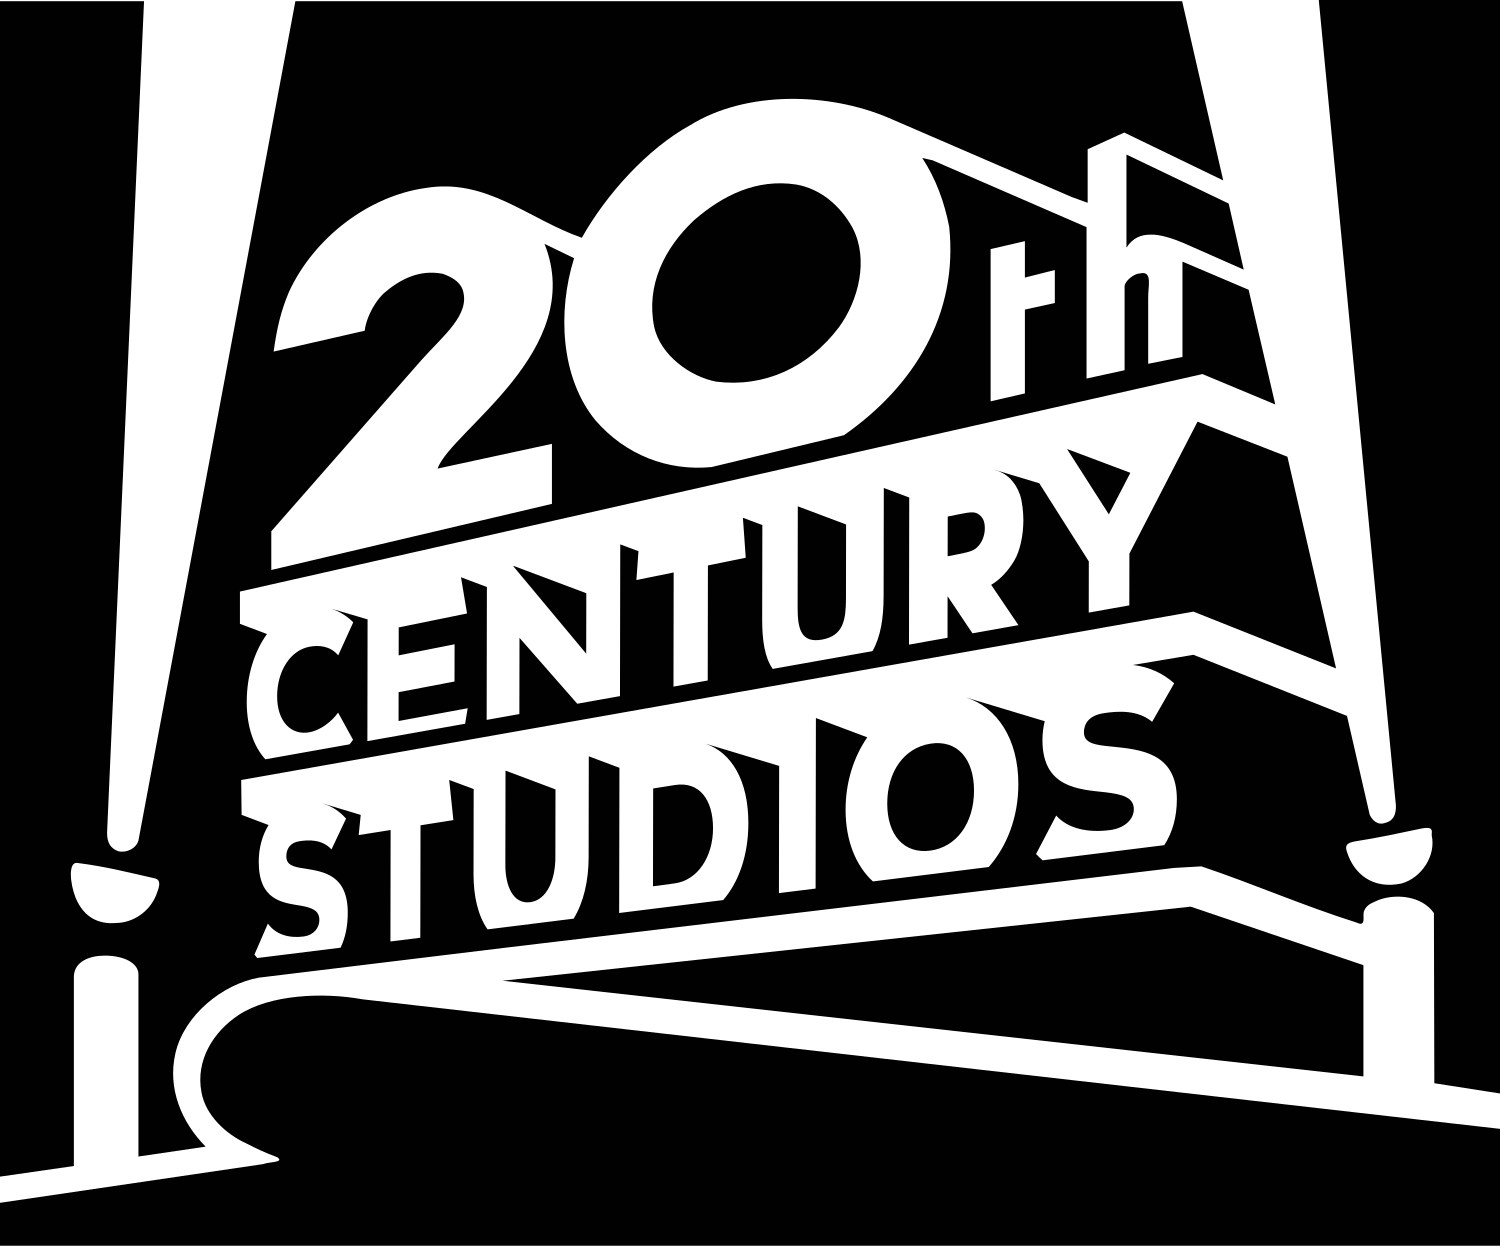 File:Halo 4 logo.svg - Wikimedia Commons